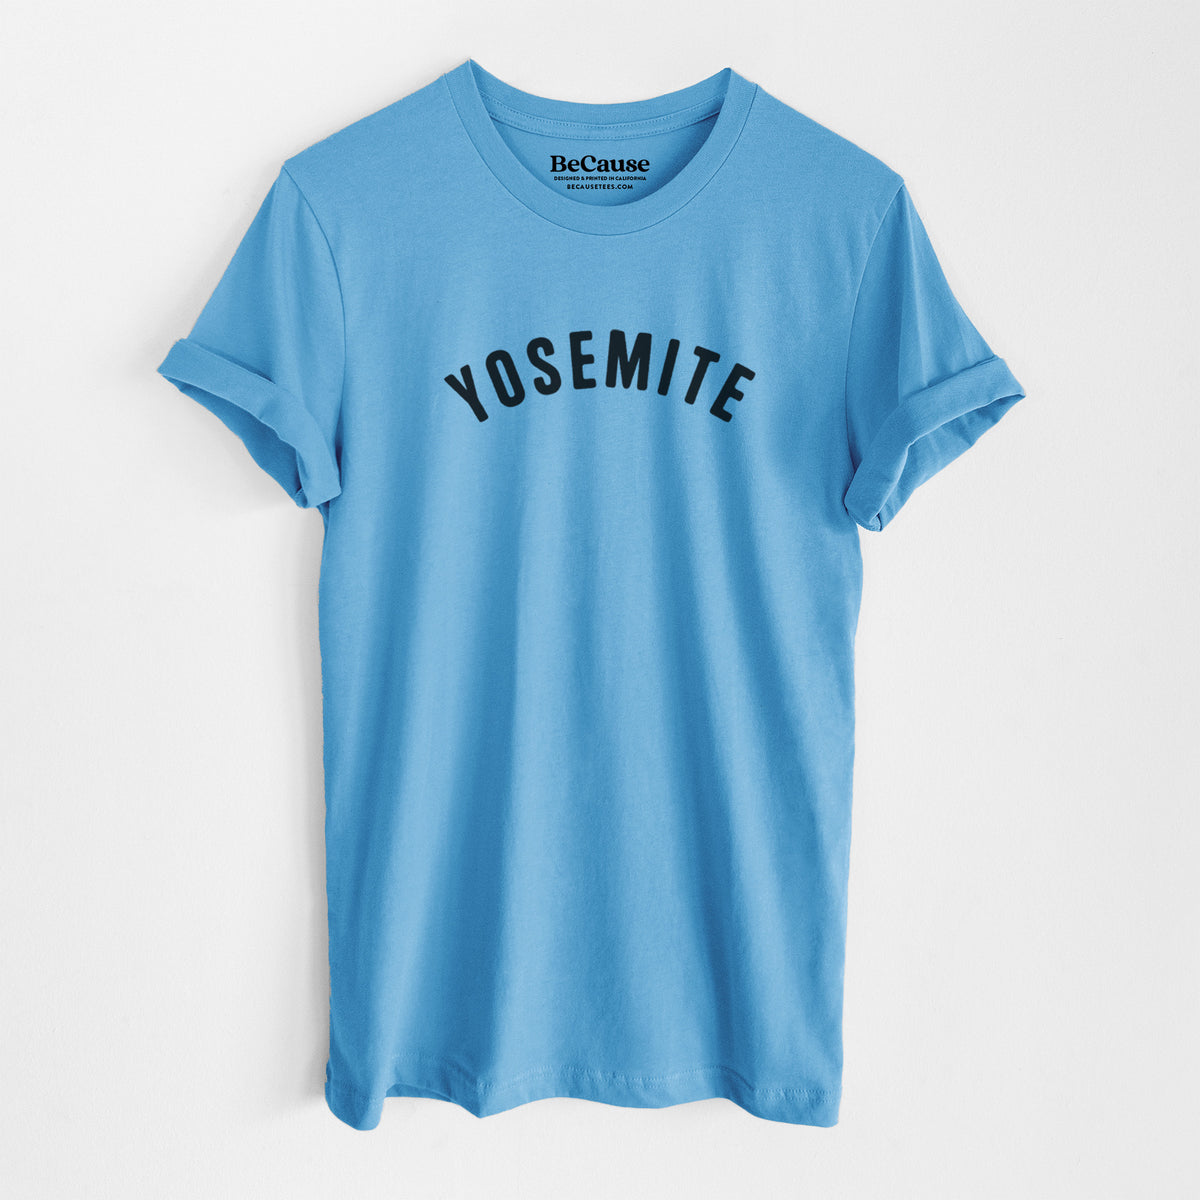 Yosemite - Lightweight 100% Cotton Unisex Crewneck